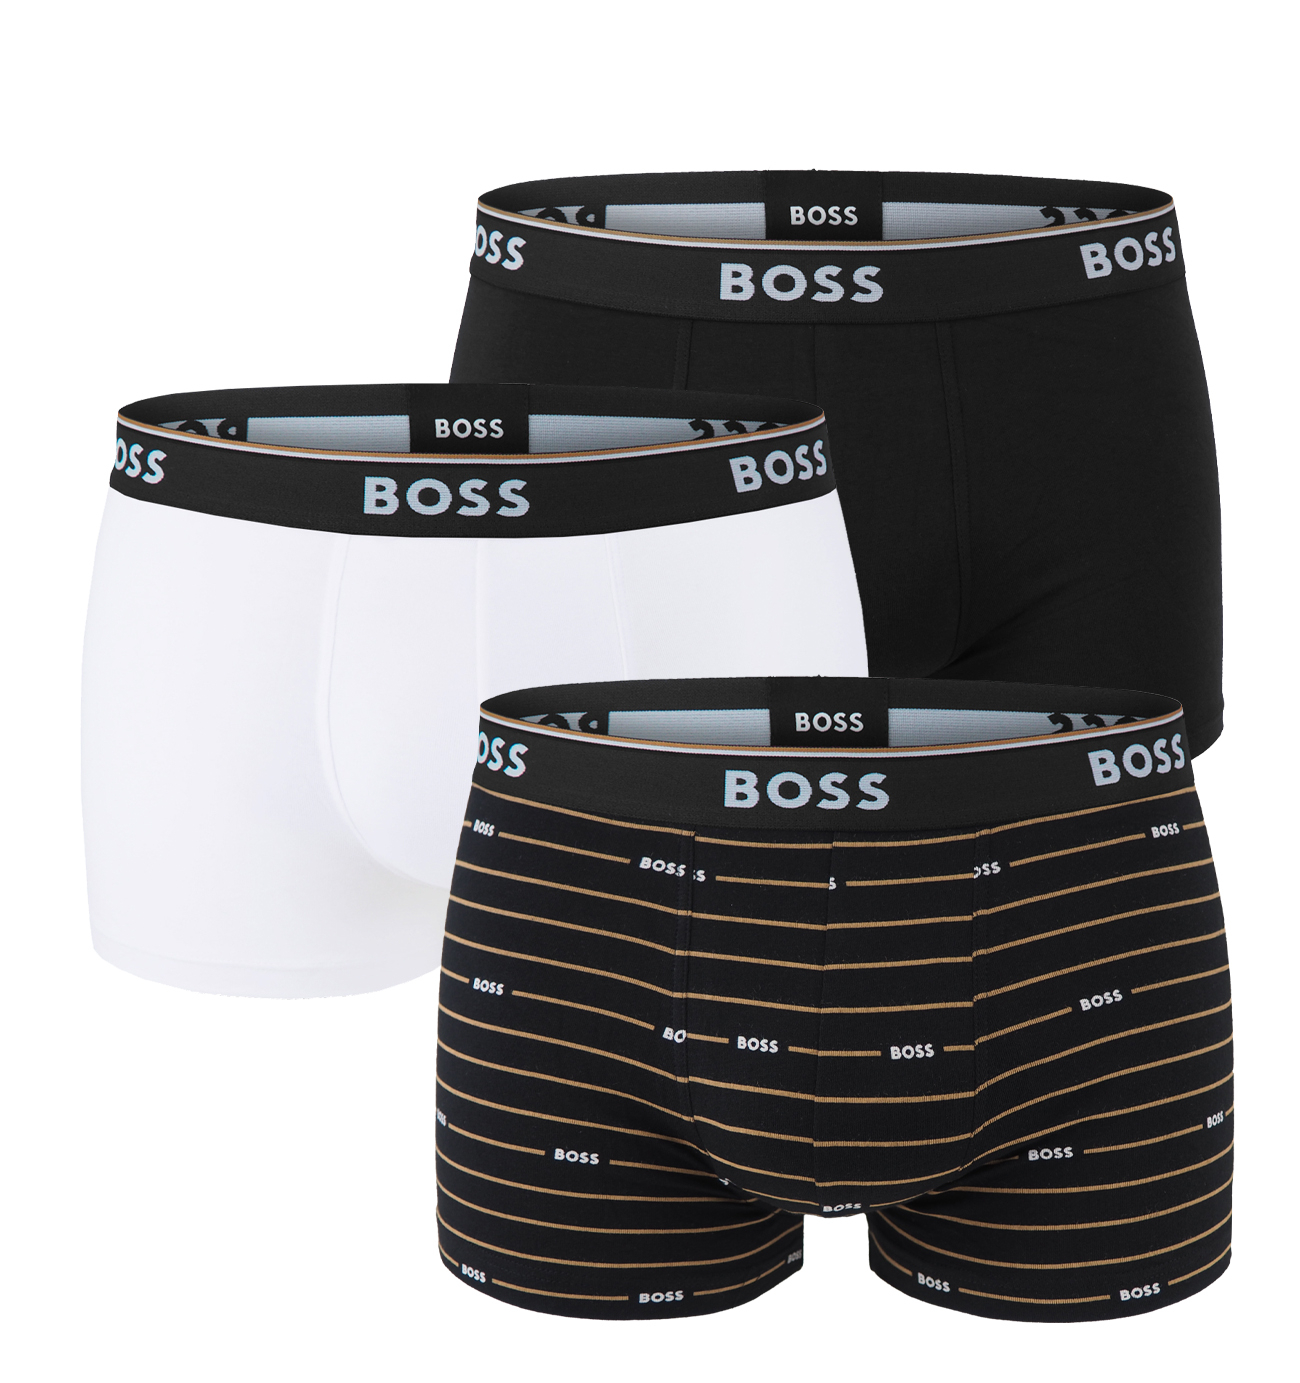 BOSS - boxerky 3PACK cotton stretch power design BOSS logo - limitovaná fashion edícia (HUGO BOSS)